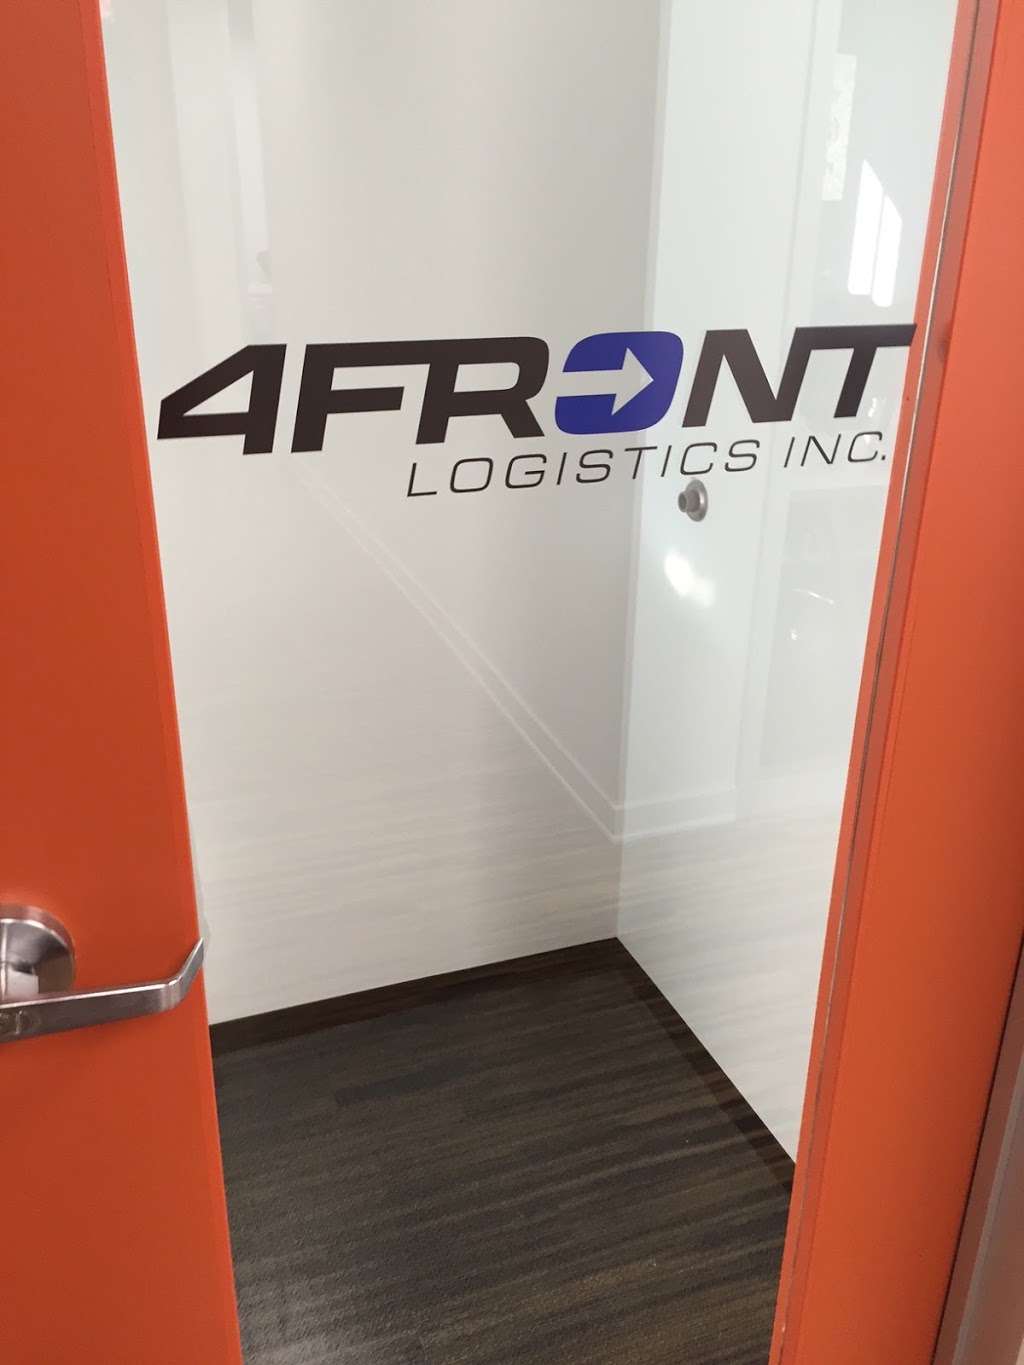 4Front Logistics, Inc | 935 W Chestnut St #206, Chicago, IL 60642, USA | Phone: (312) 883-8280